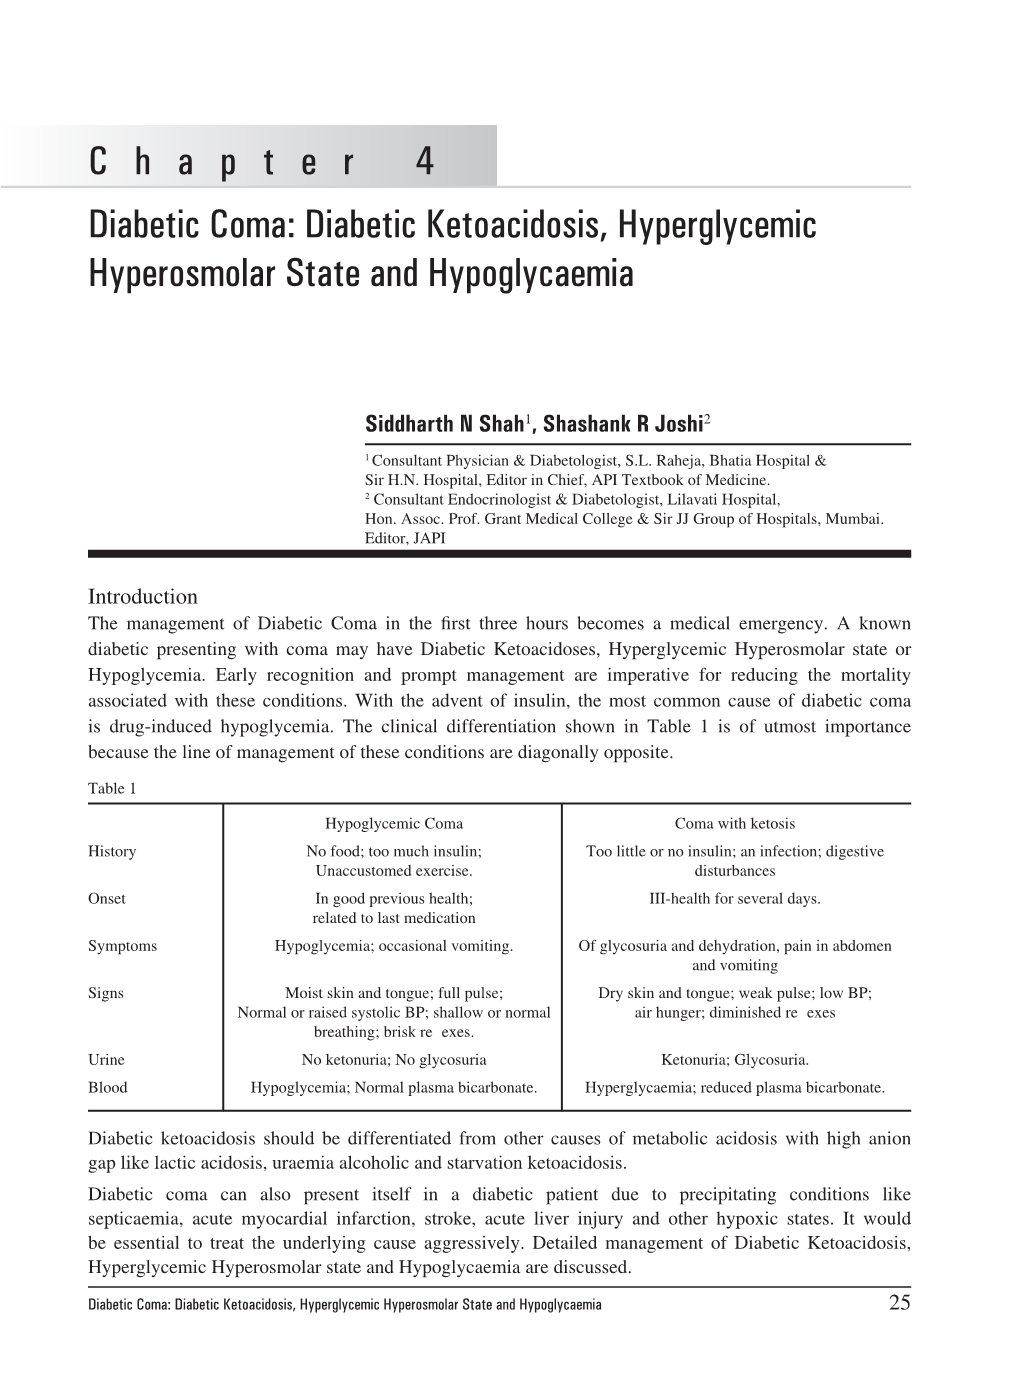 Diabetic Coma: Diabetic Ketoacidosis, Hyperglycemic Hyperosmolar State and Hypoglycaemia